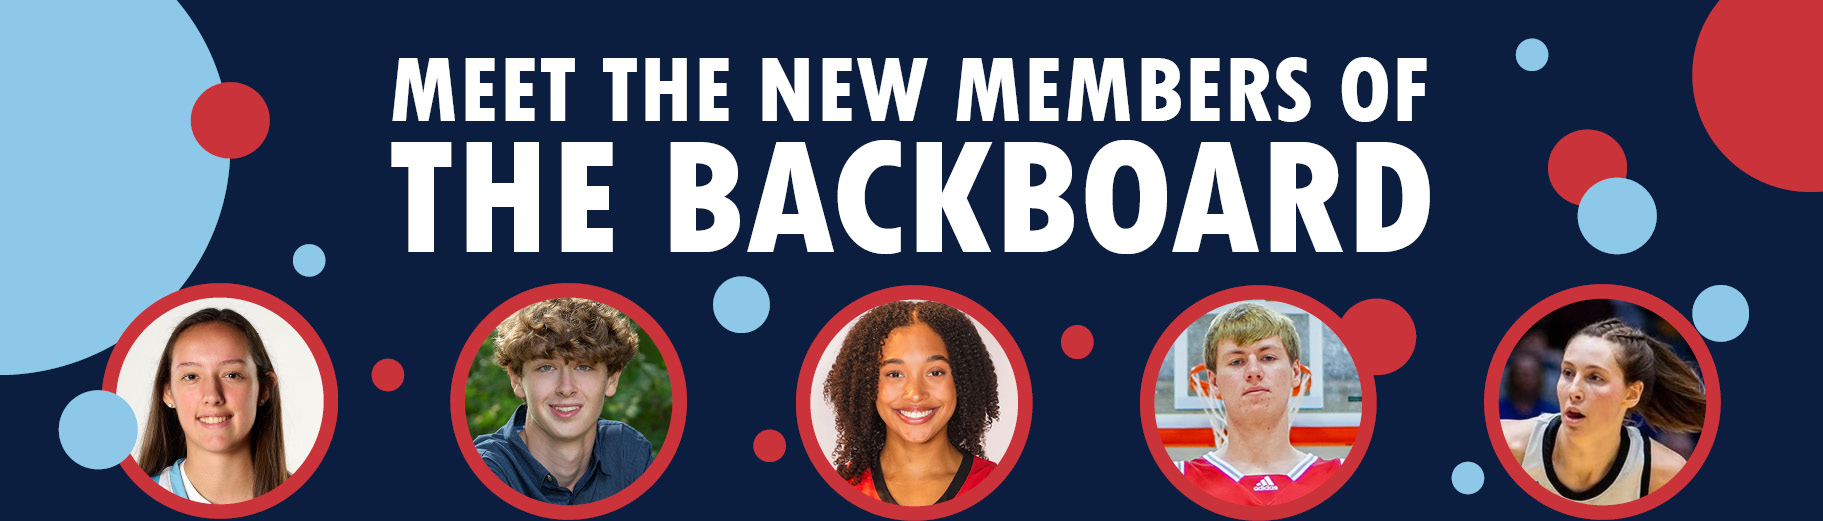 New Members of the Backboard